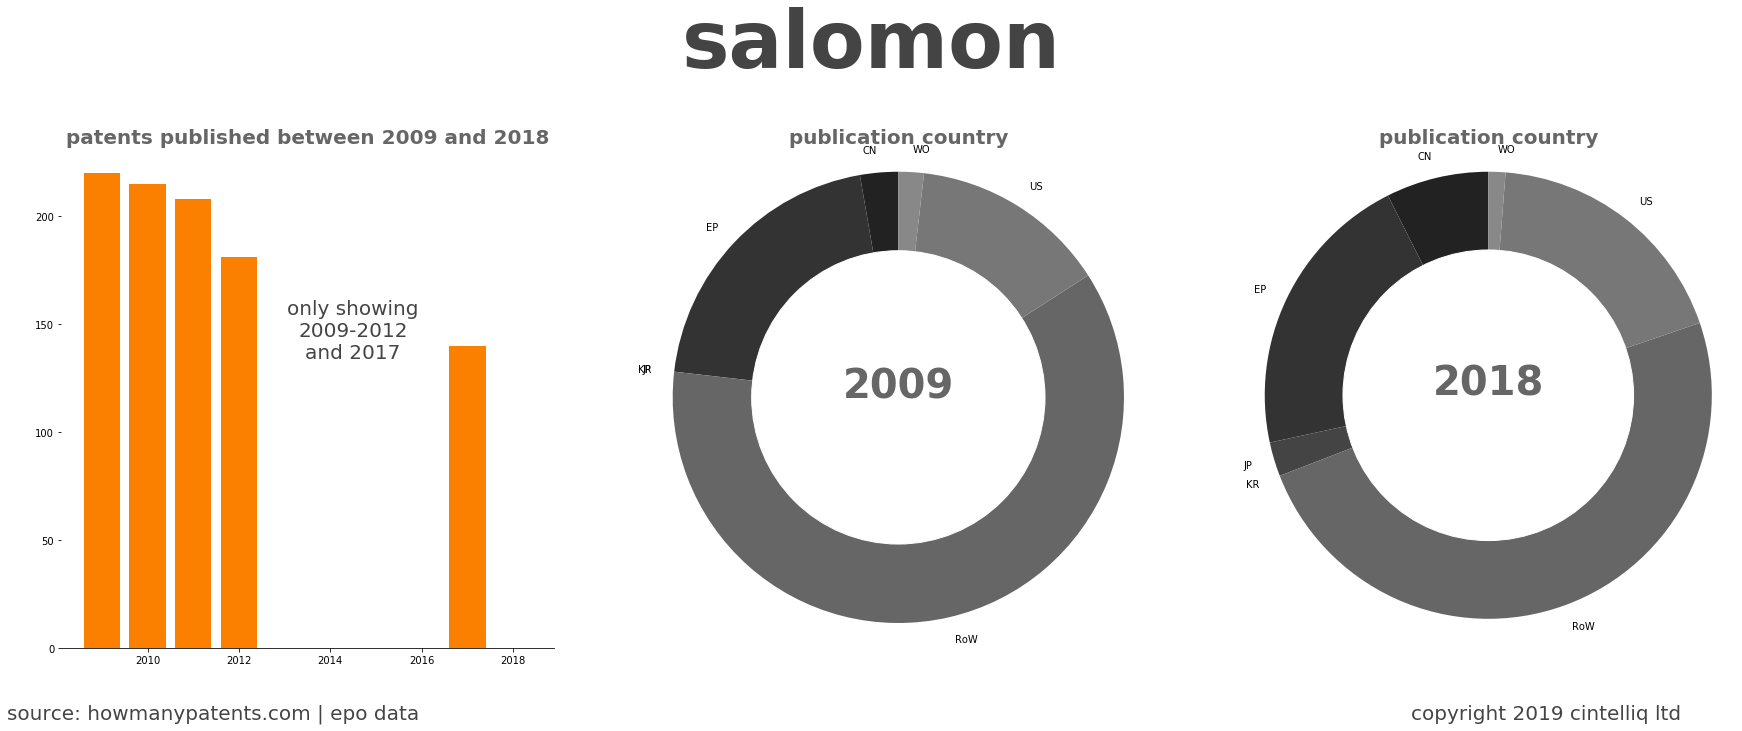 summary of patents for Salomon